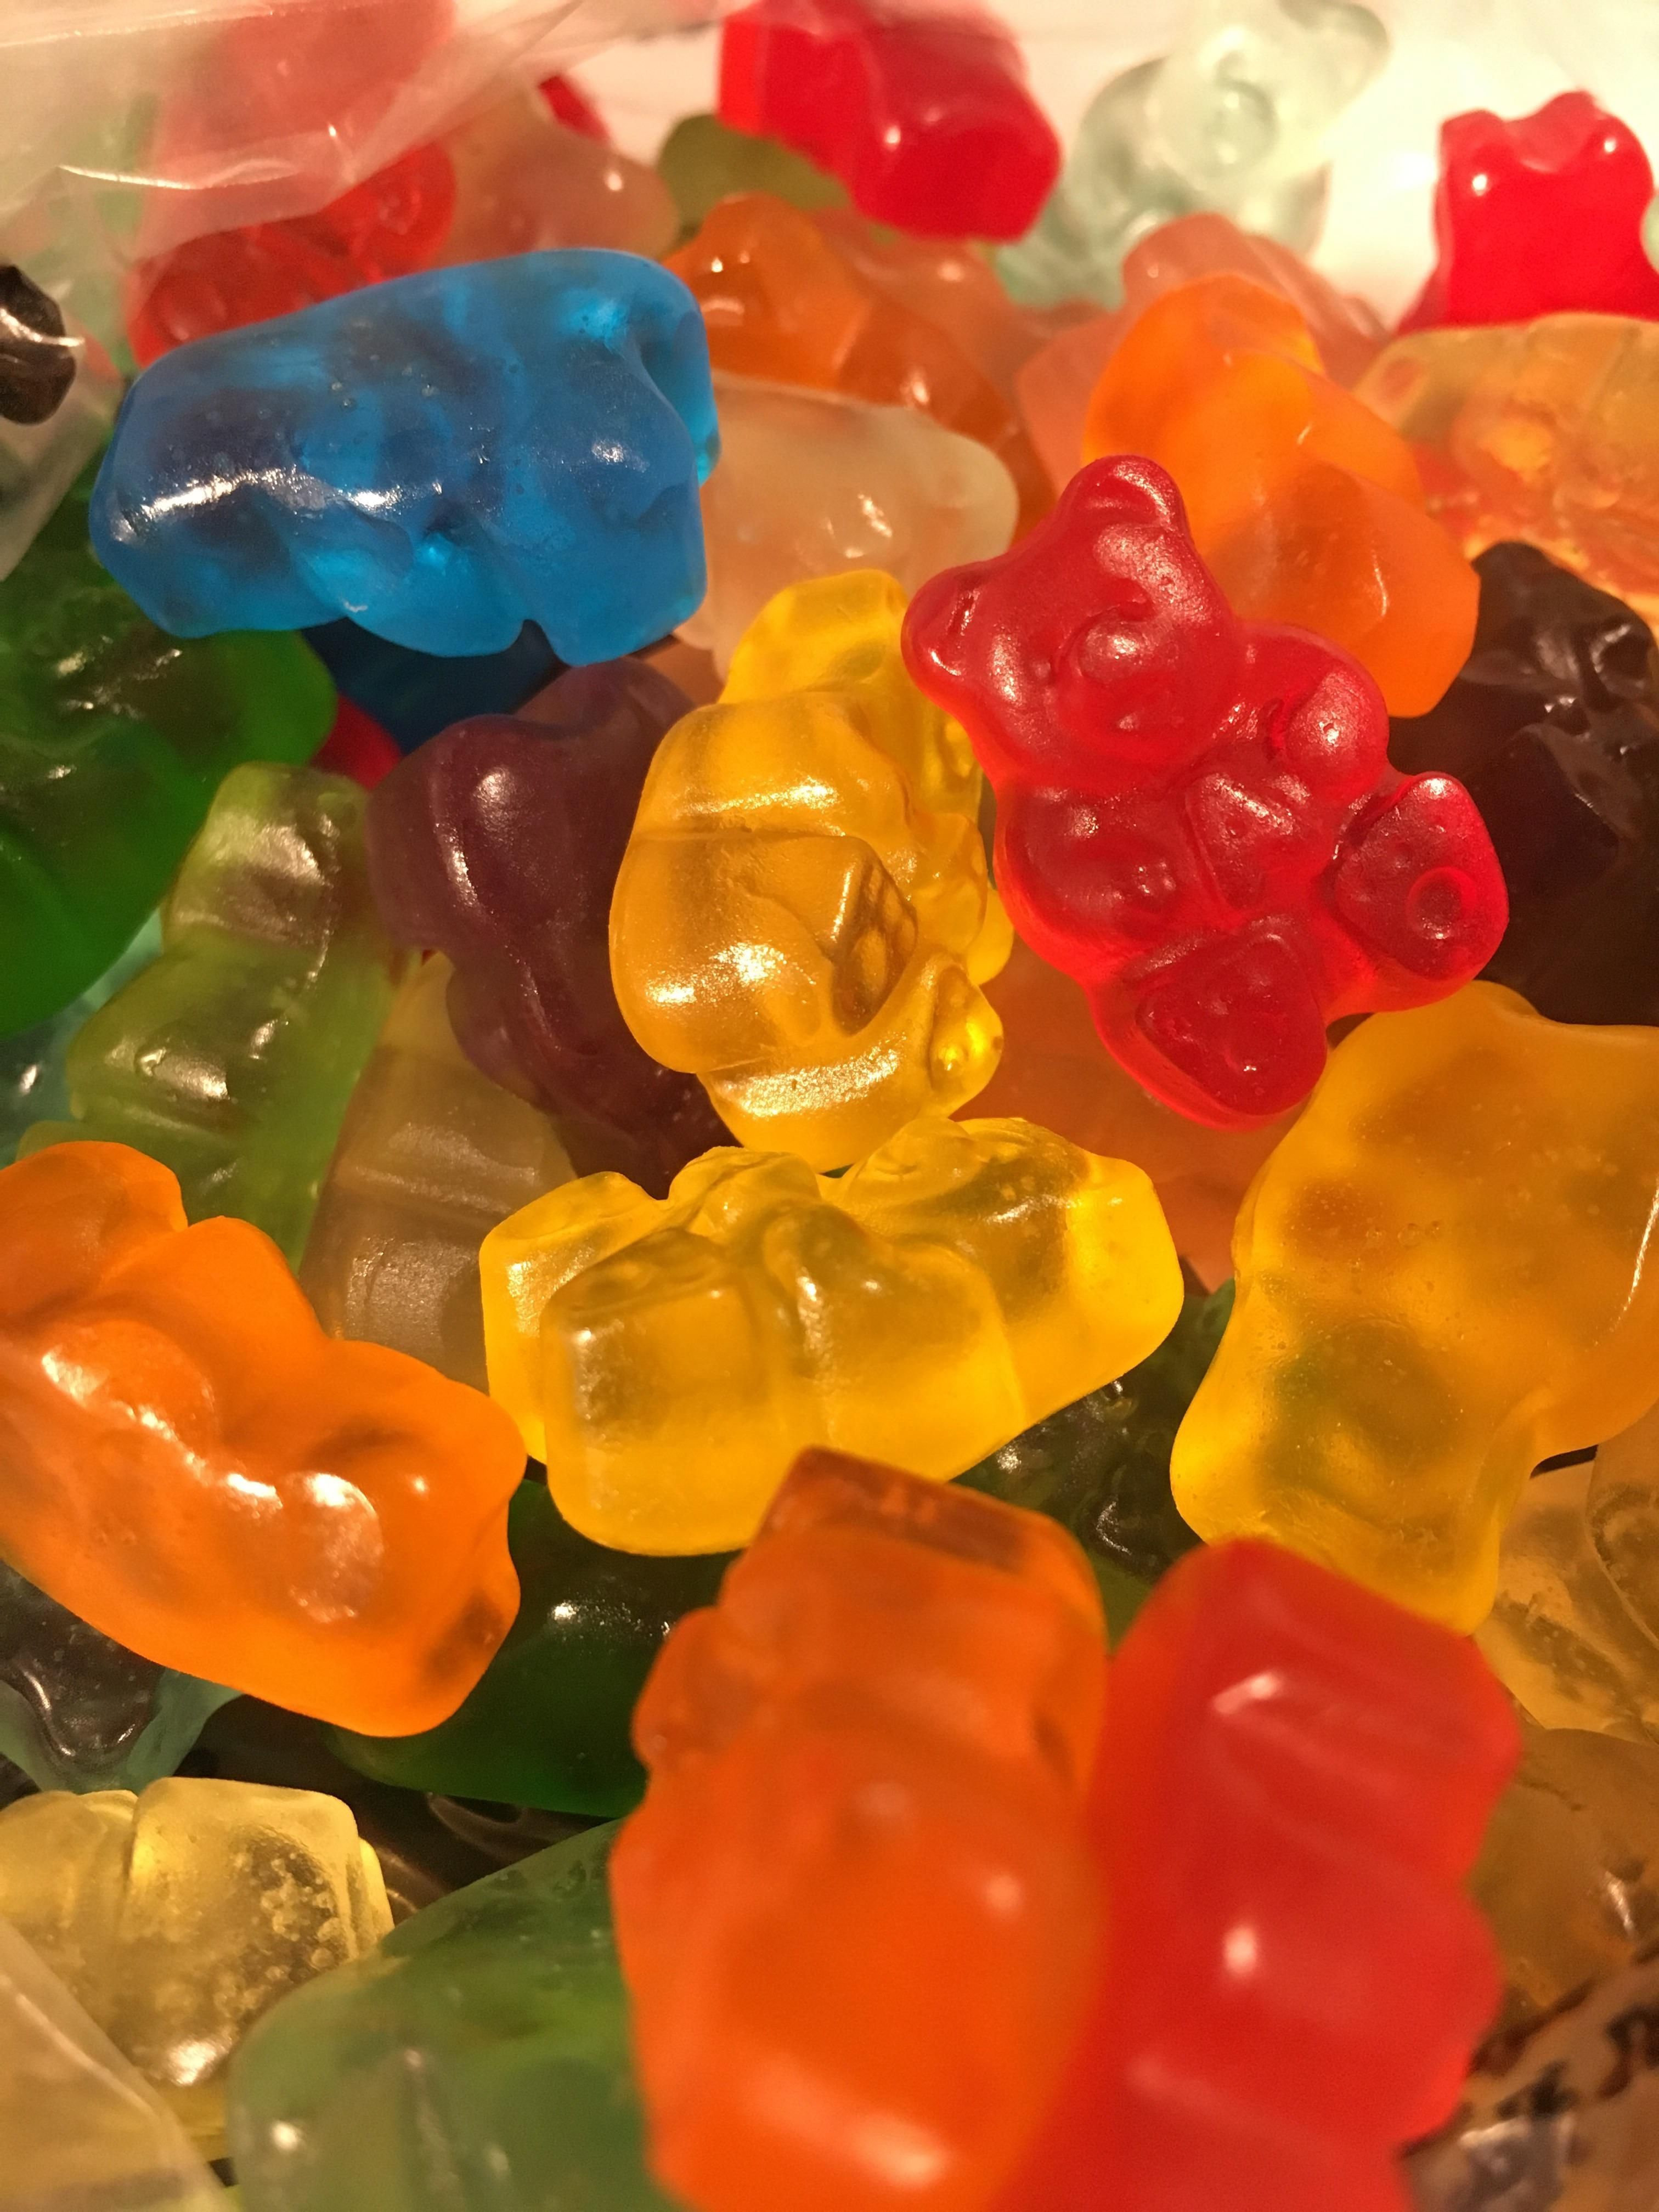 I ate Gourmet Gummy Bears Food Recipes. Best gummy bears, Gummy